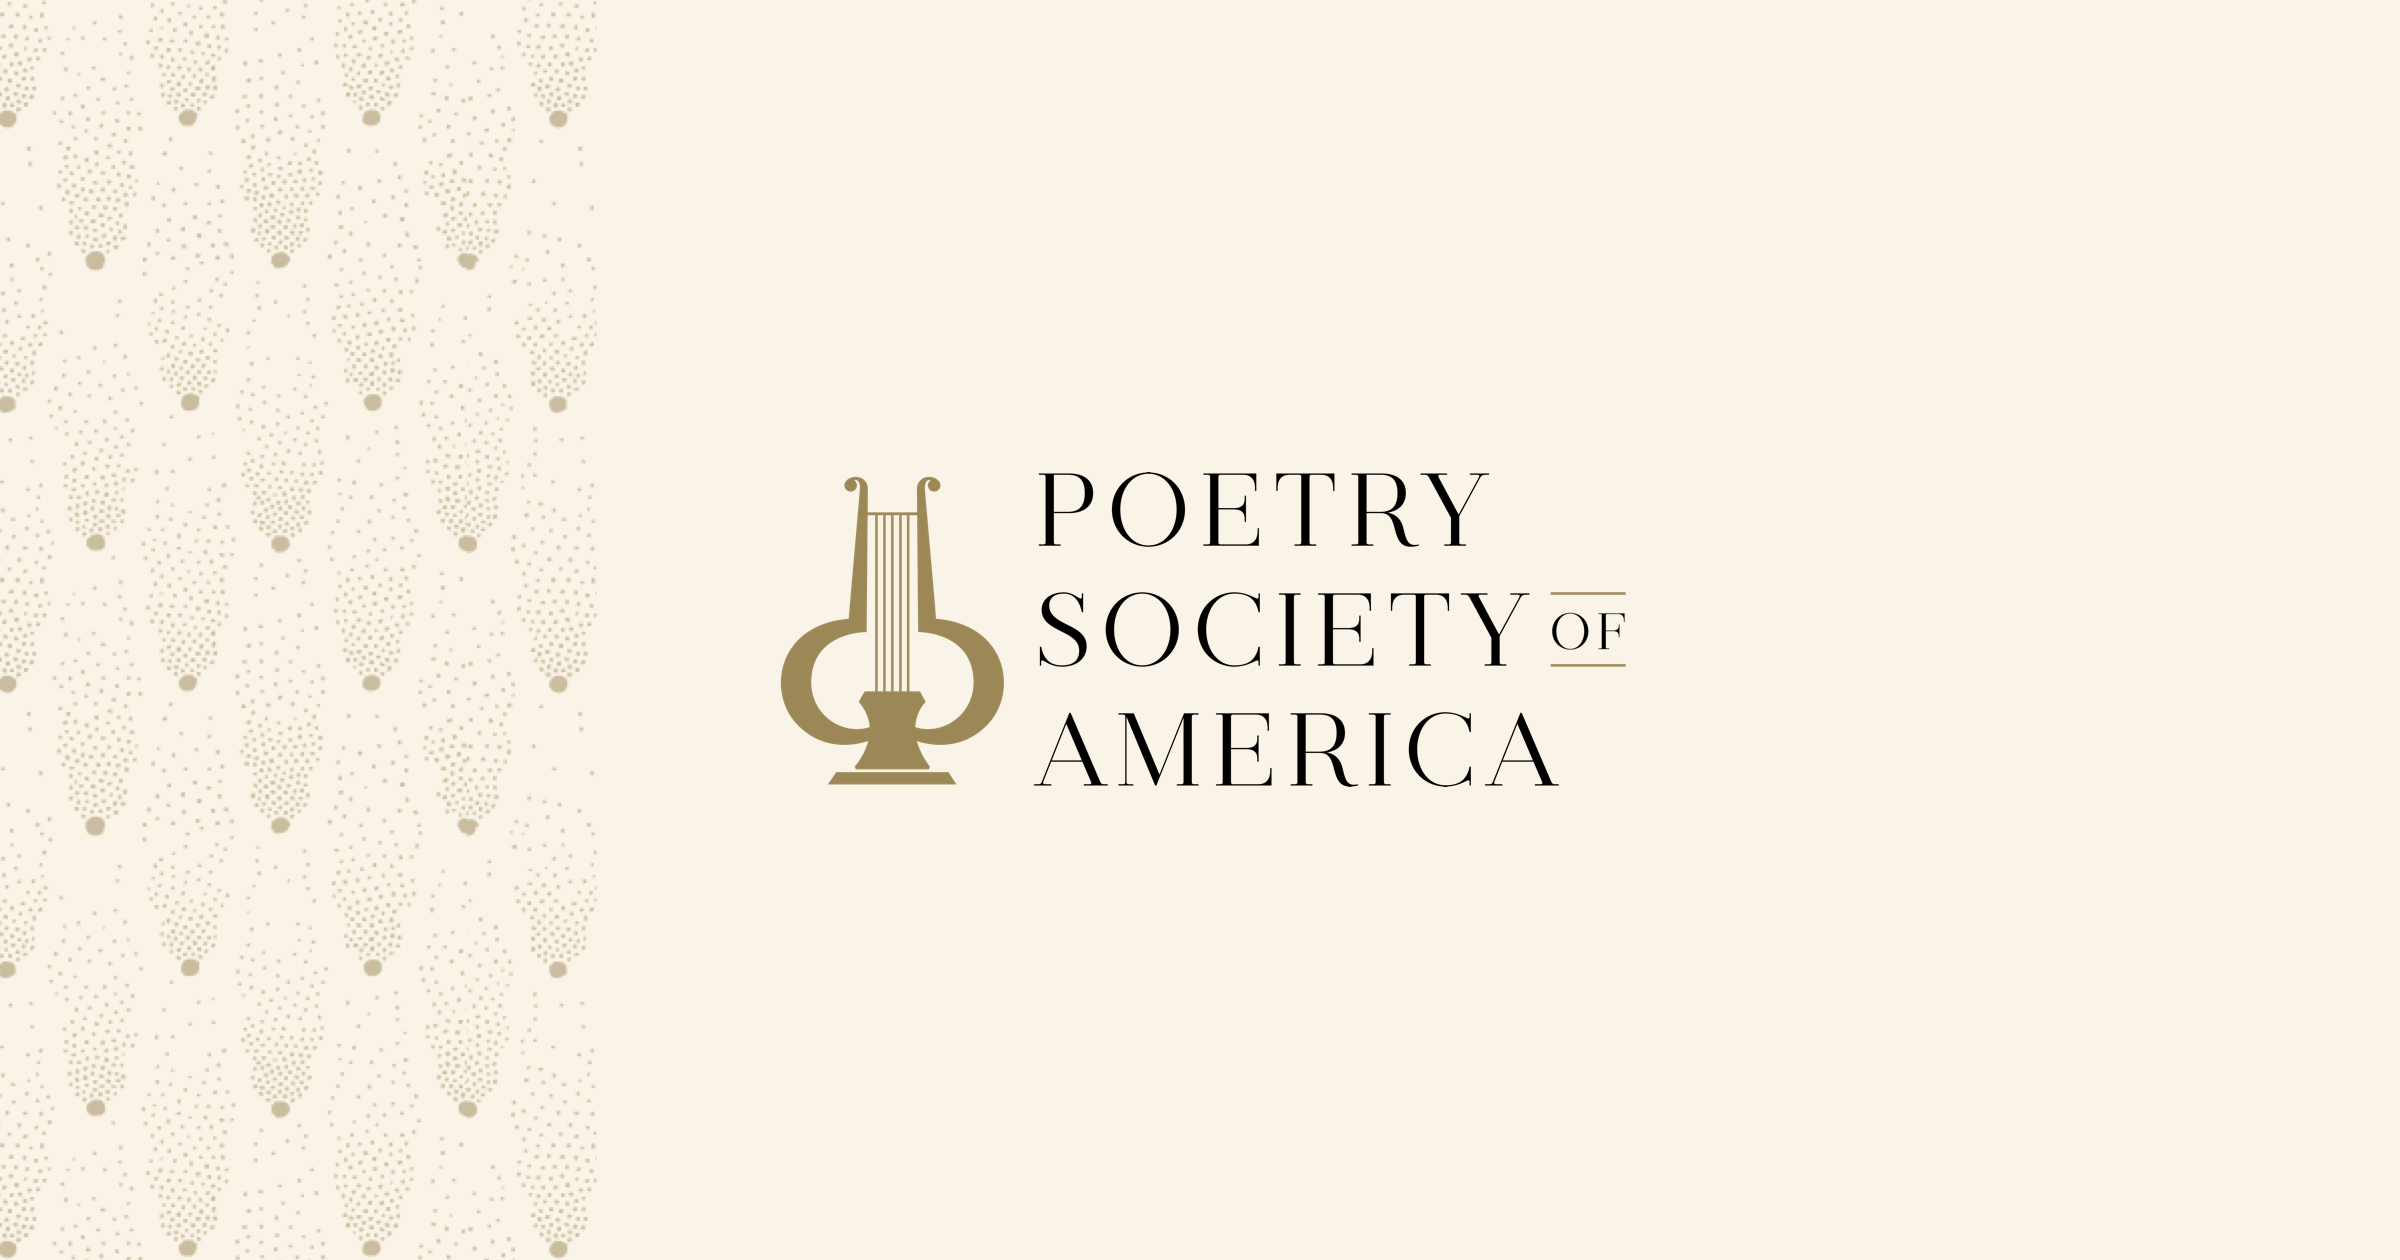 poetrysociety.org